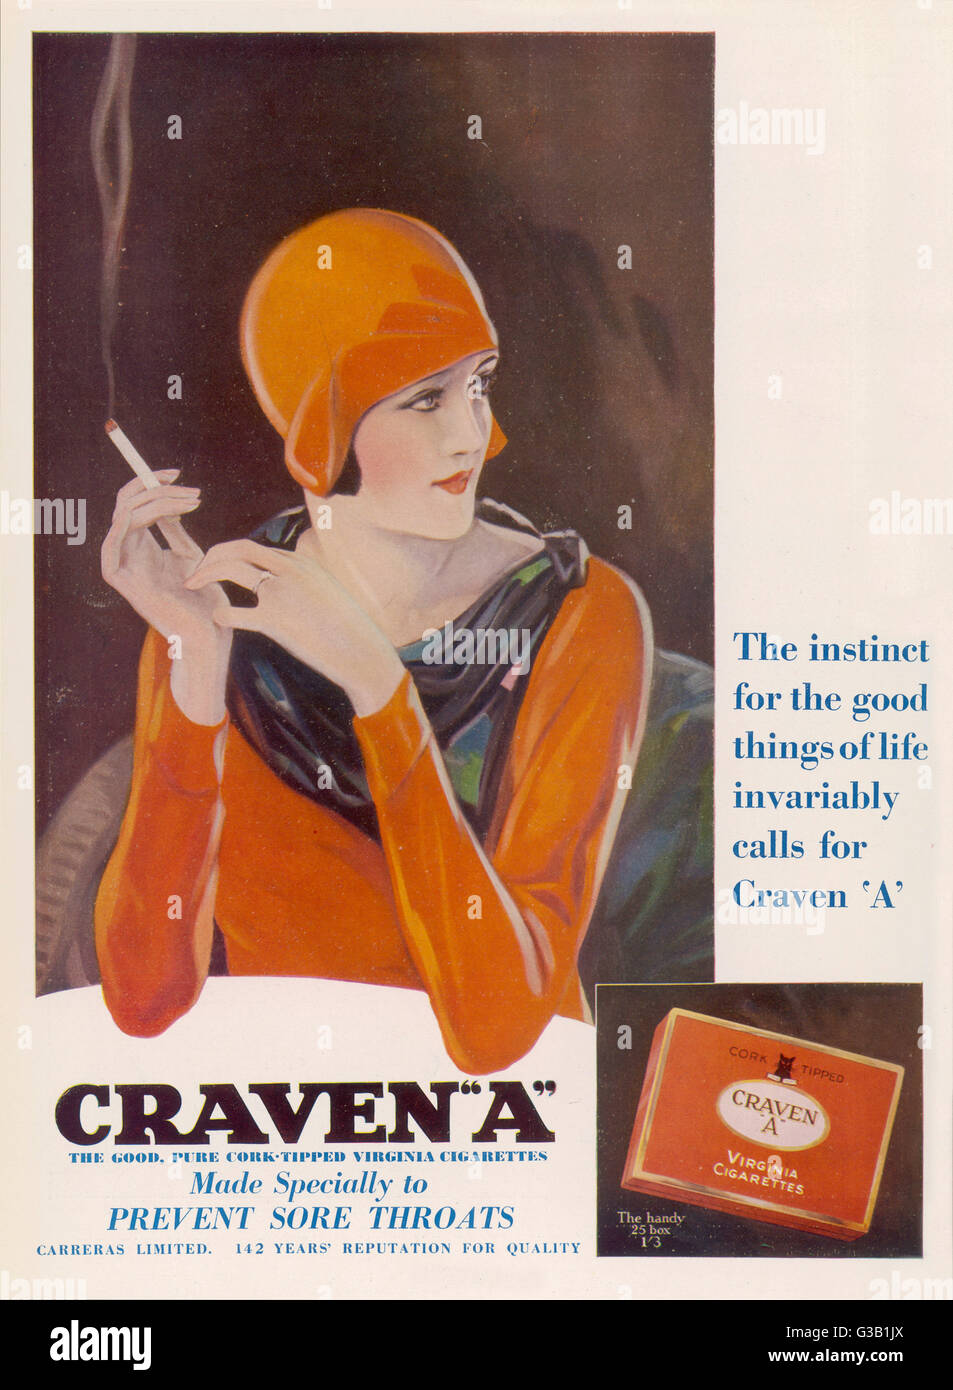 Advert for Craven A cigarettes 1930 Stock Photo